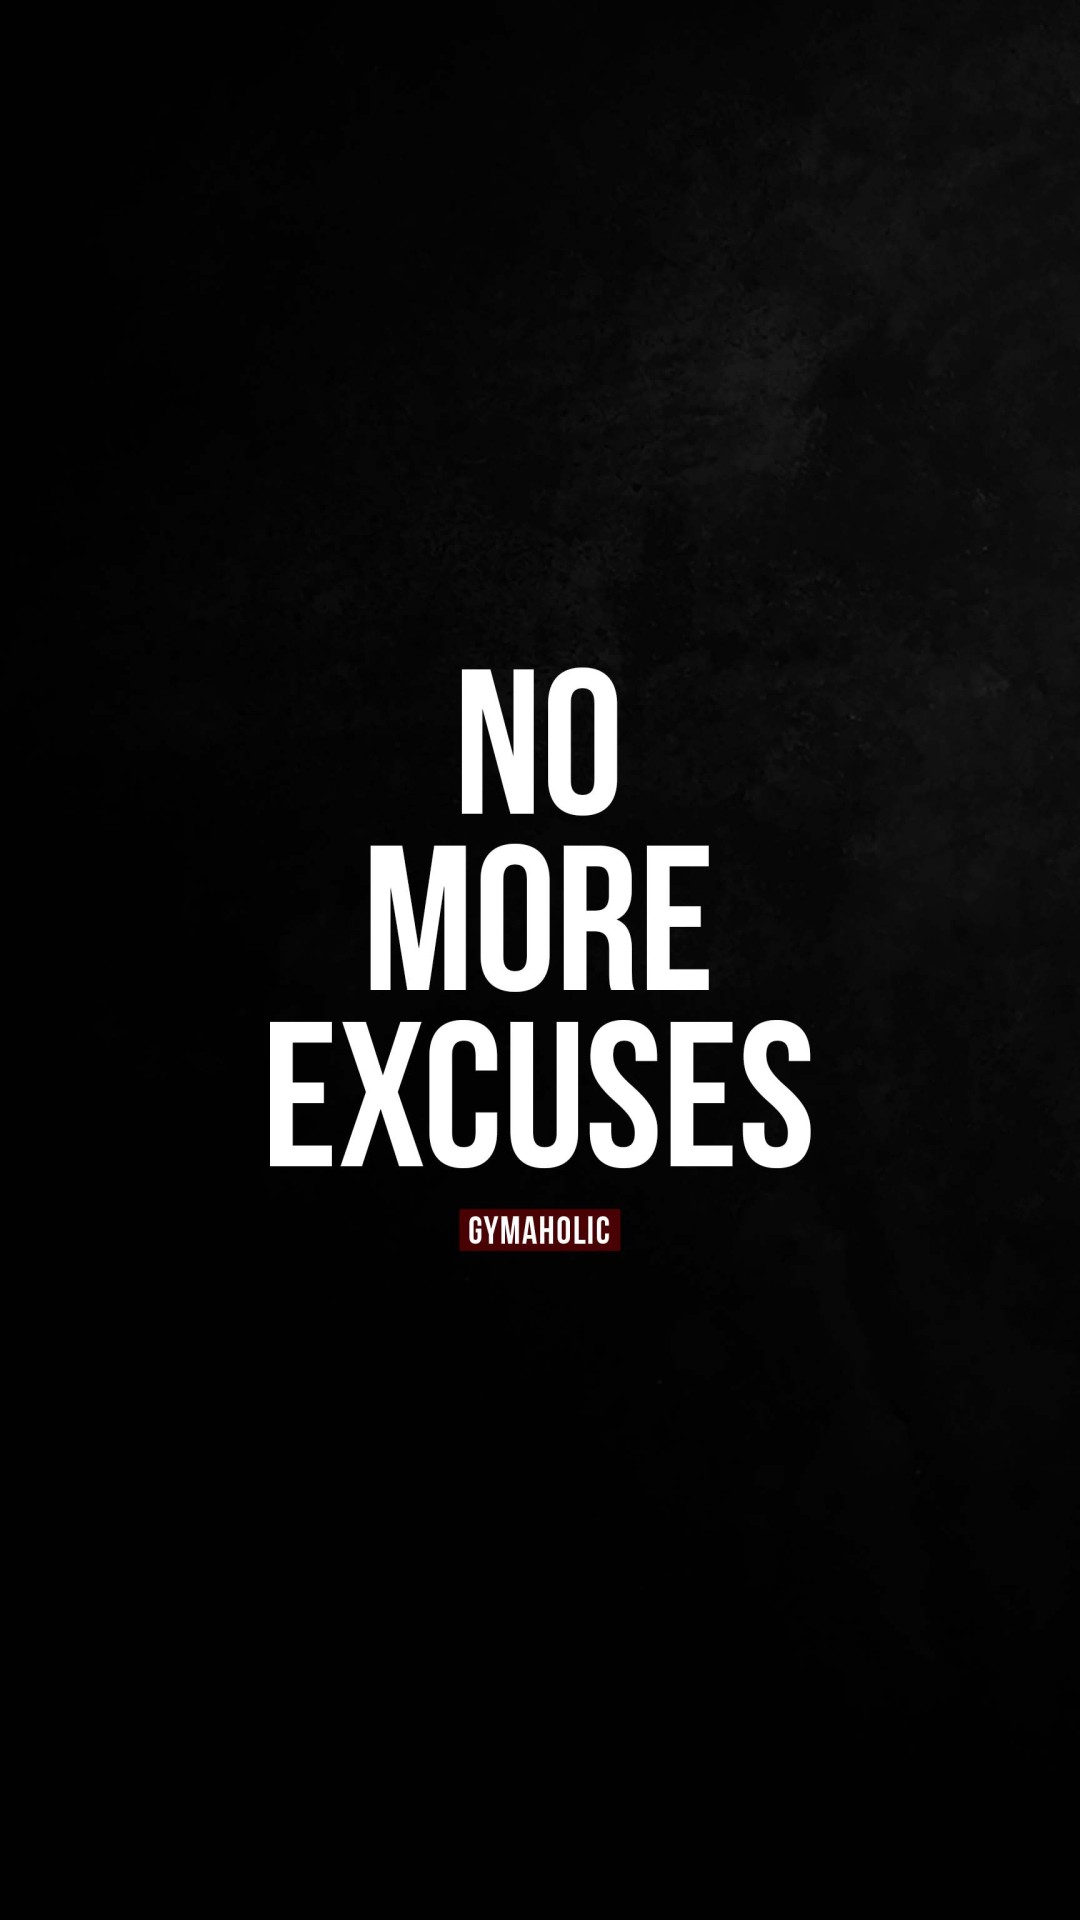 No more excuses.